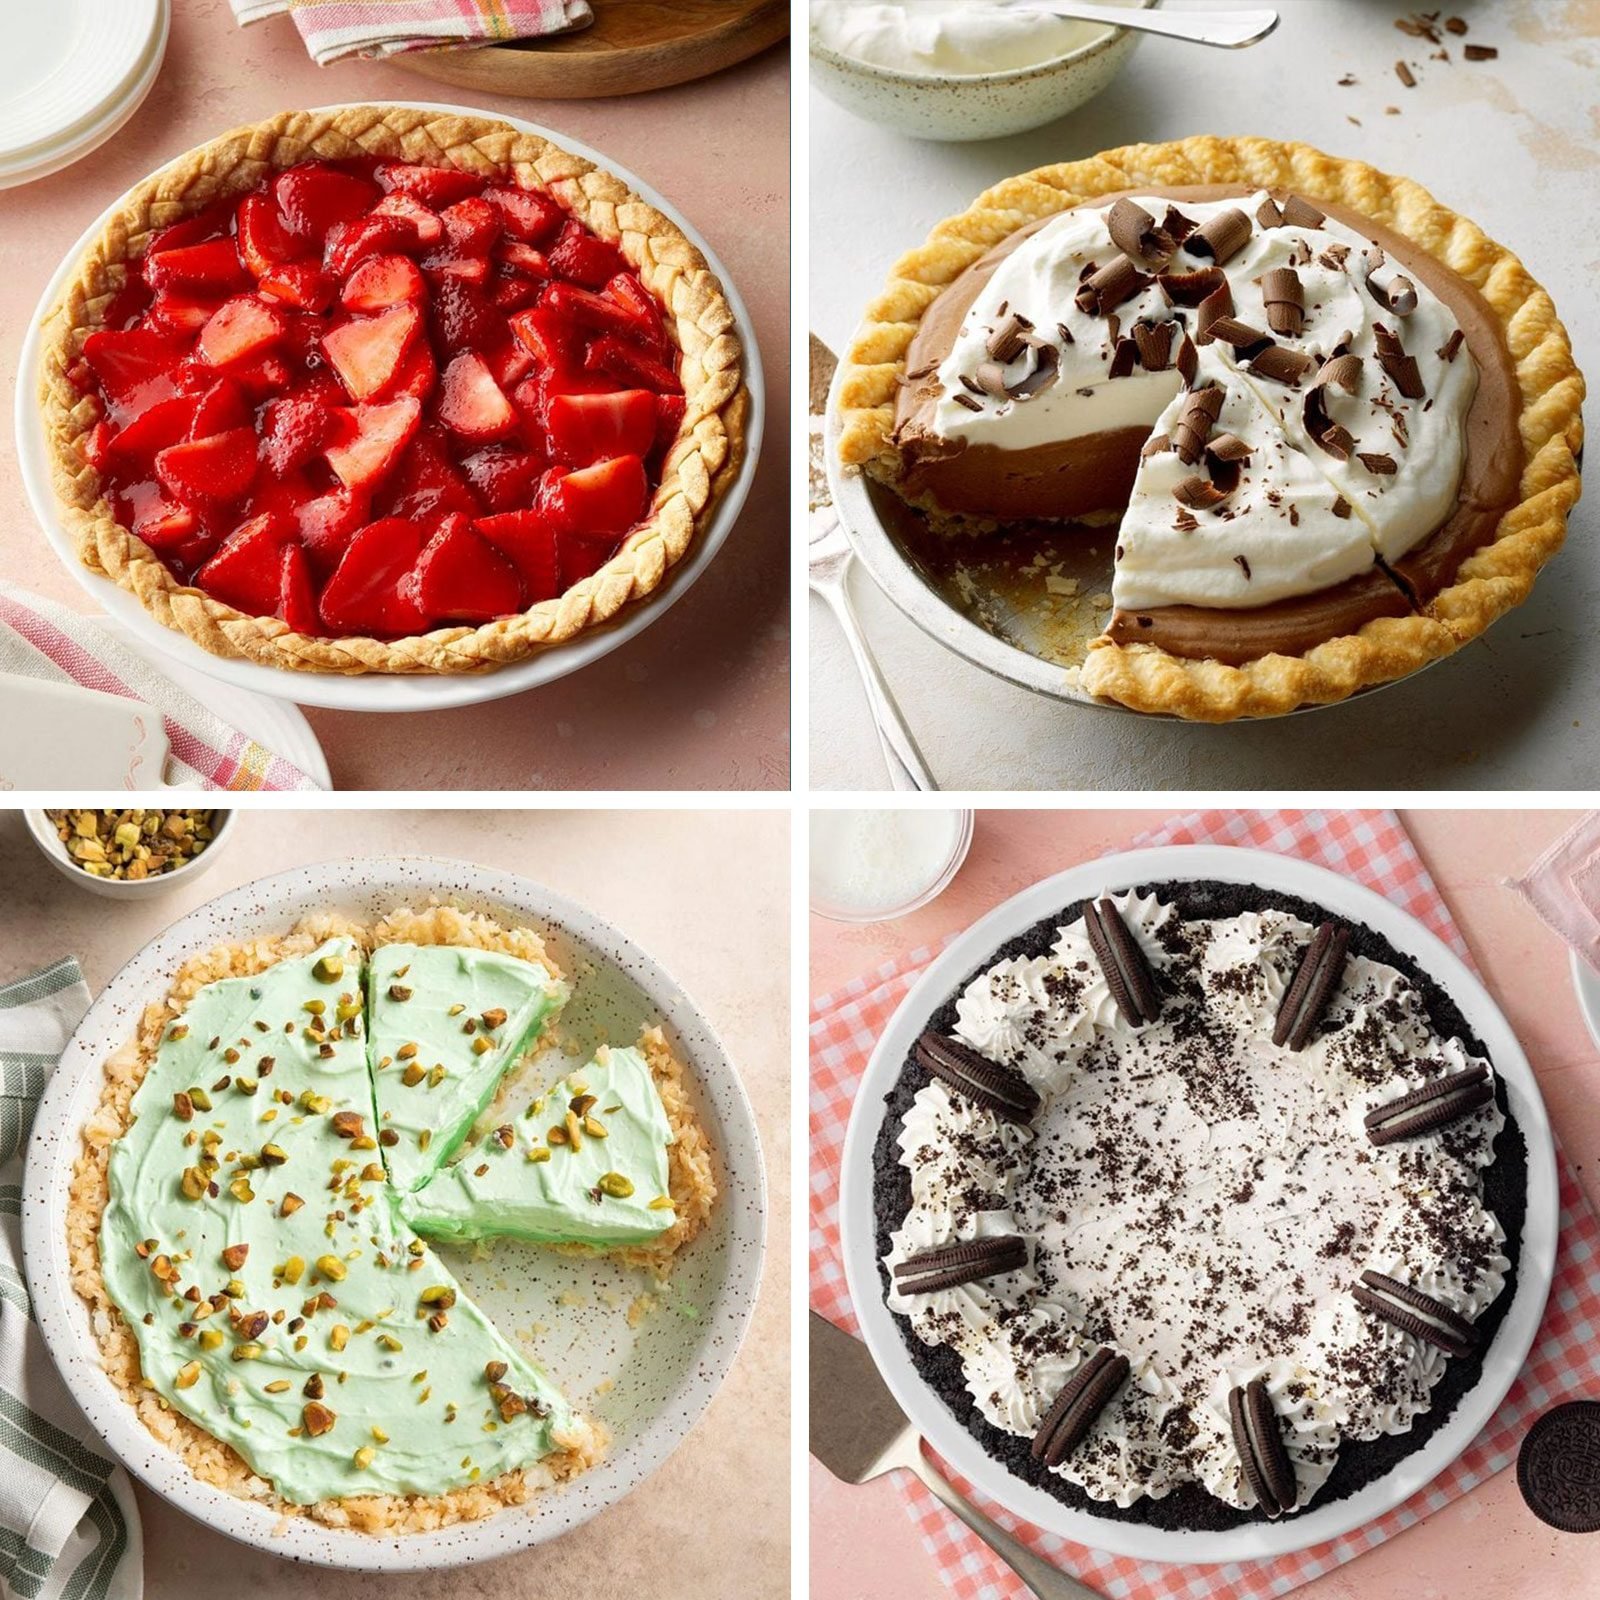 https://www.tasteofhome.com/wp-content/uploads/2018/10/40-No-Bake-Easy-Pie-Recipes_TMB-Studio-4-FT_PD-edit.jpg